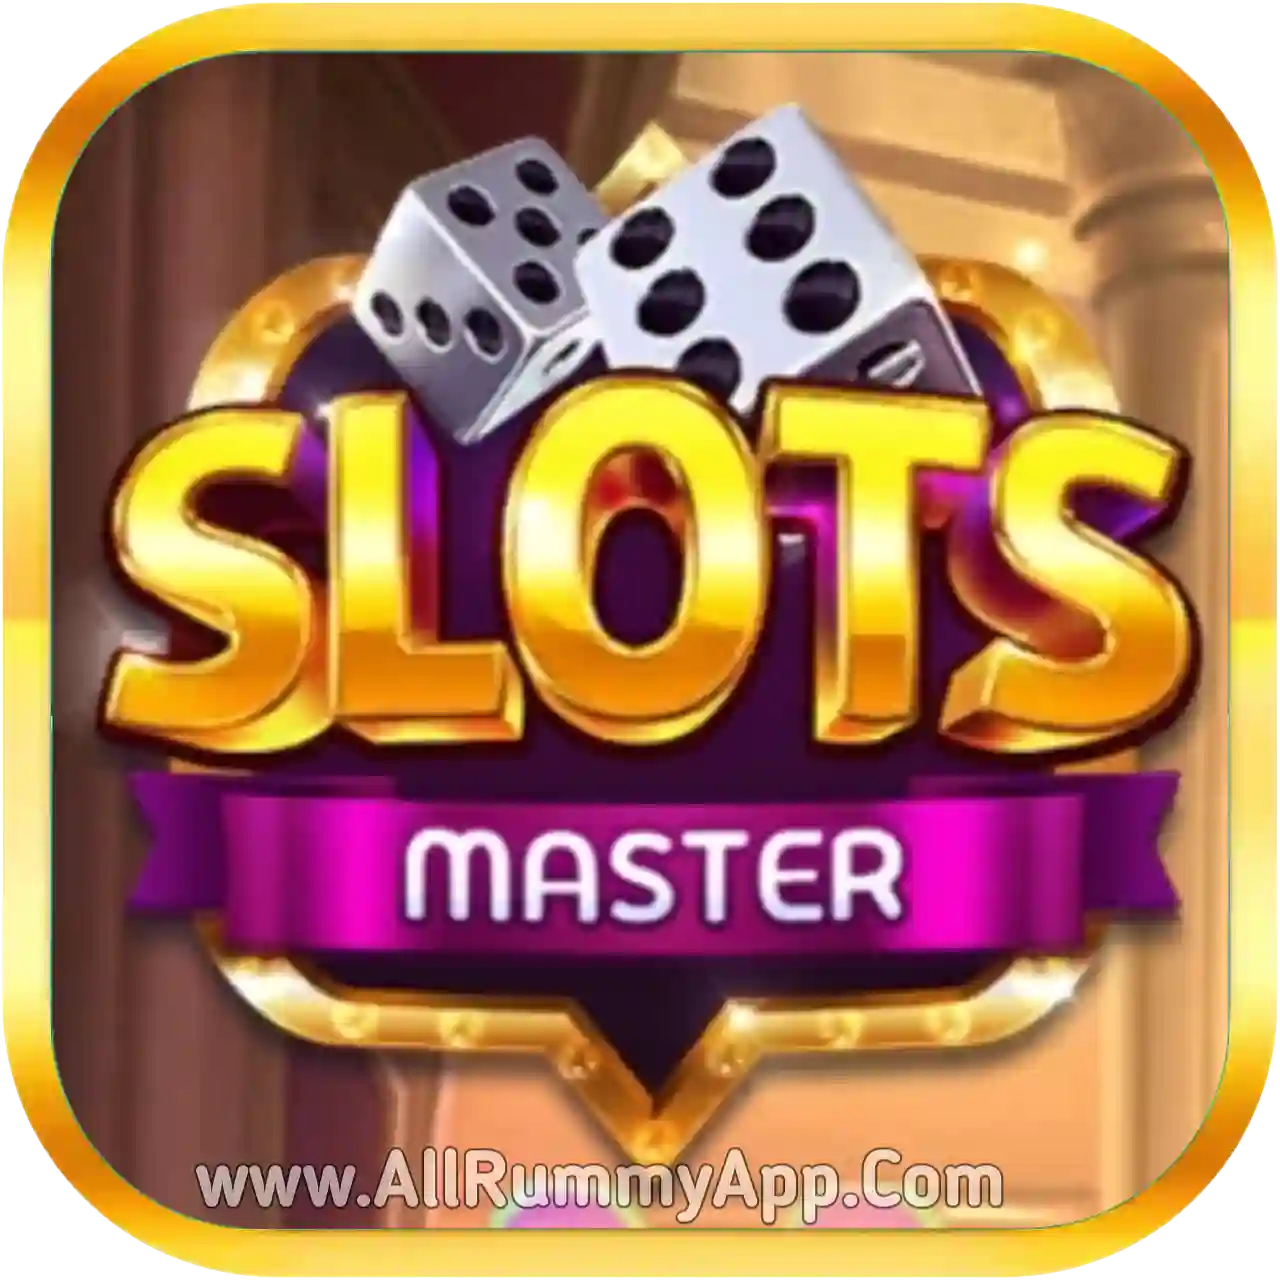 Slots Master - 9 Rummy APK Download